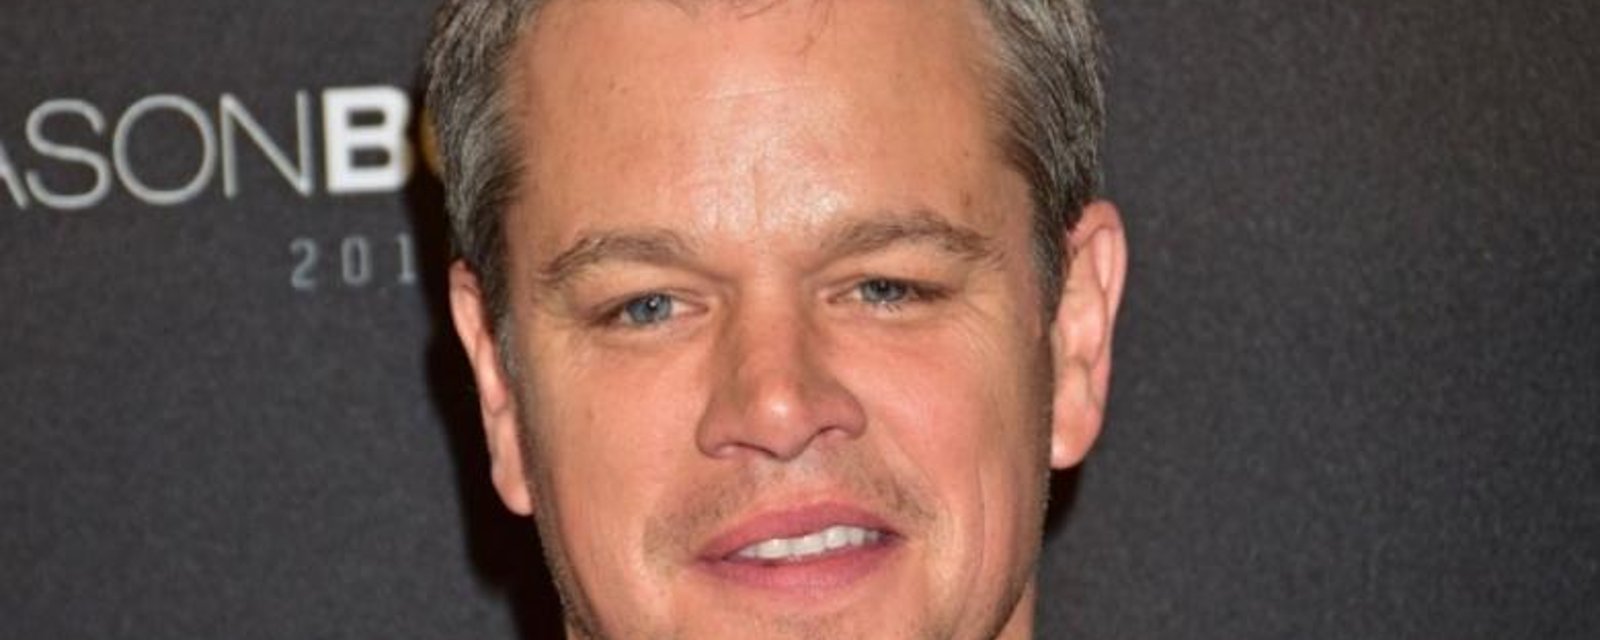 Matt Damon ne ressemble plus du tout à ça...